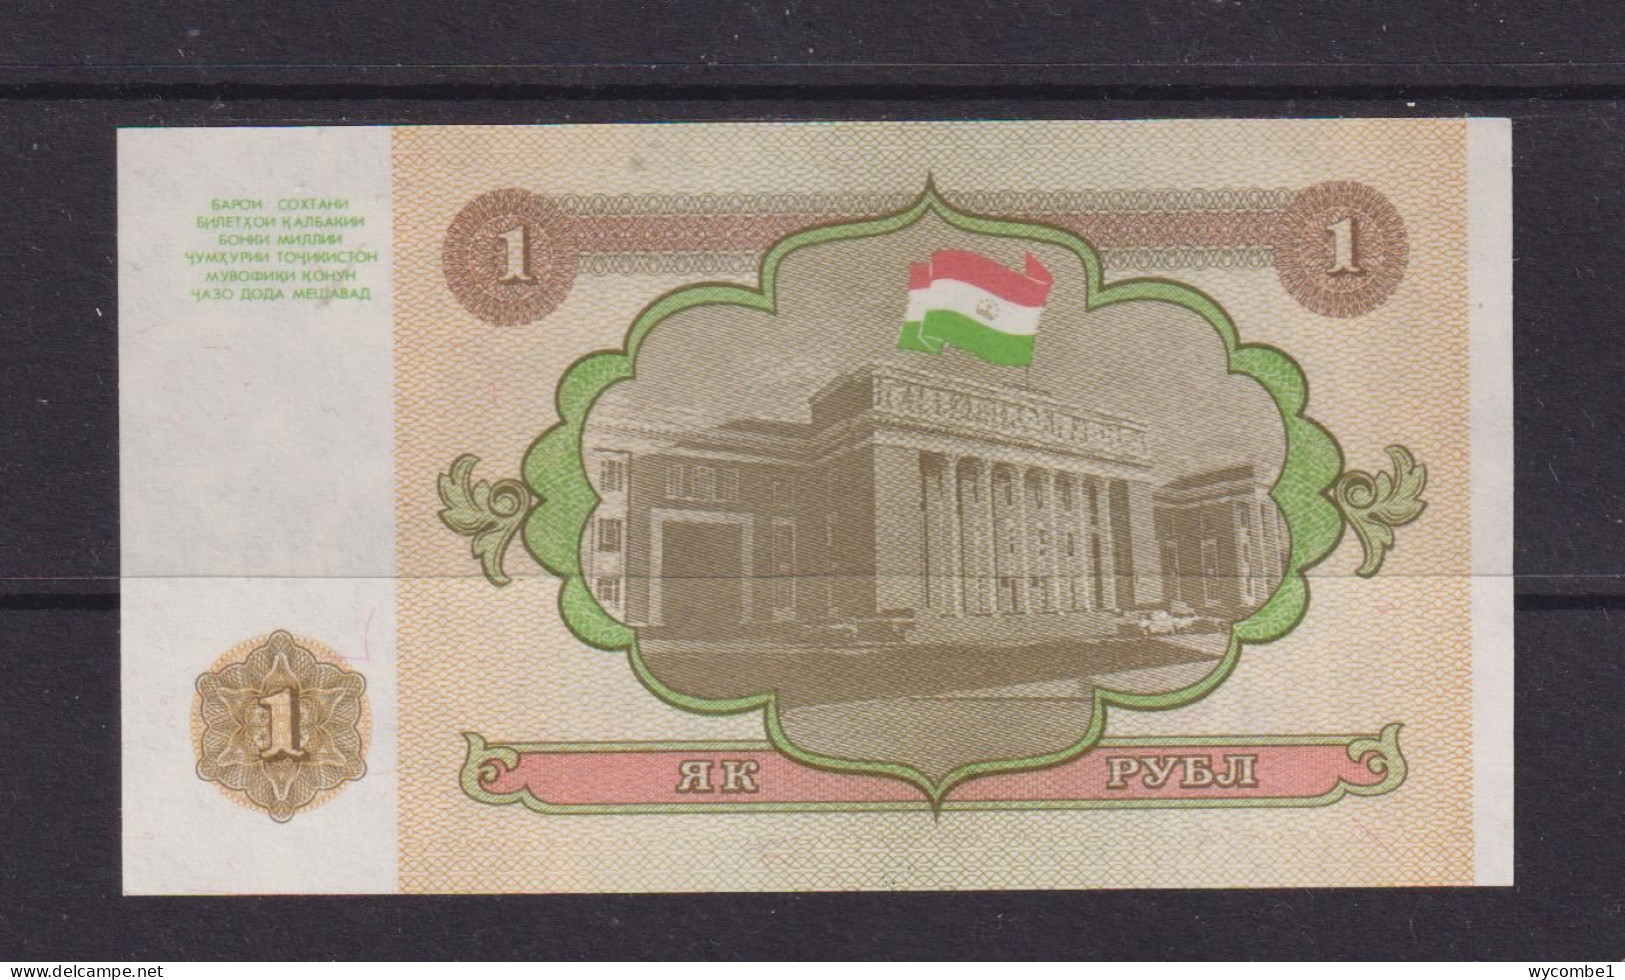 RUSSIA - 1994 1 Rouble UNC/aUNC Banknote - Russia